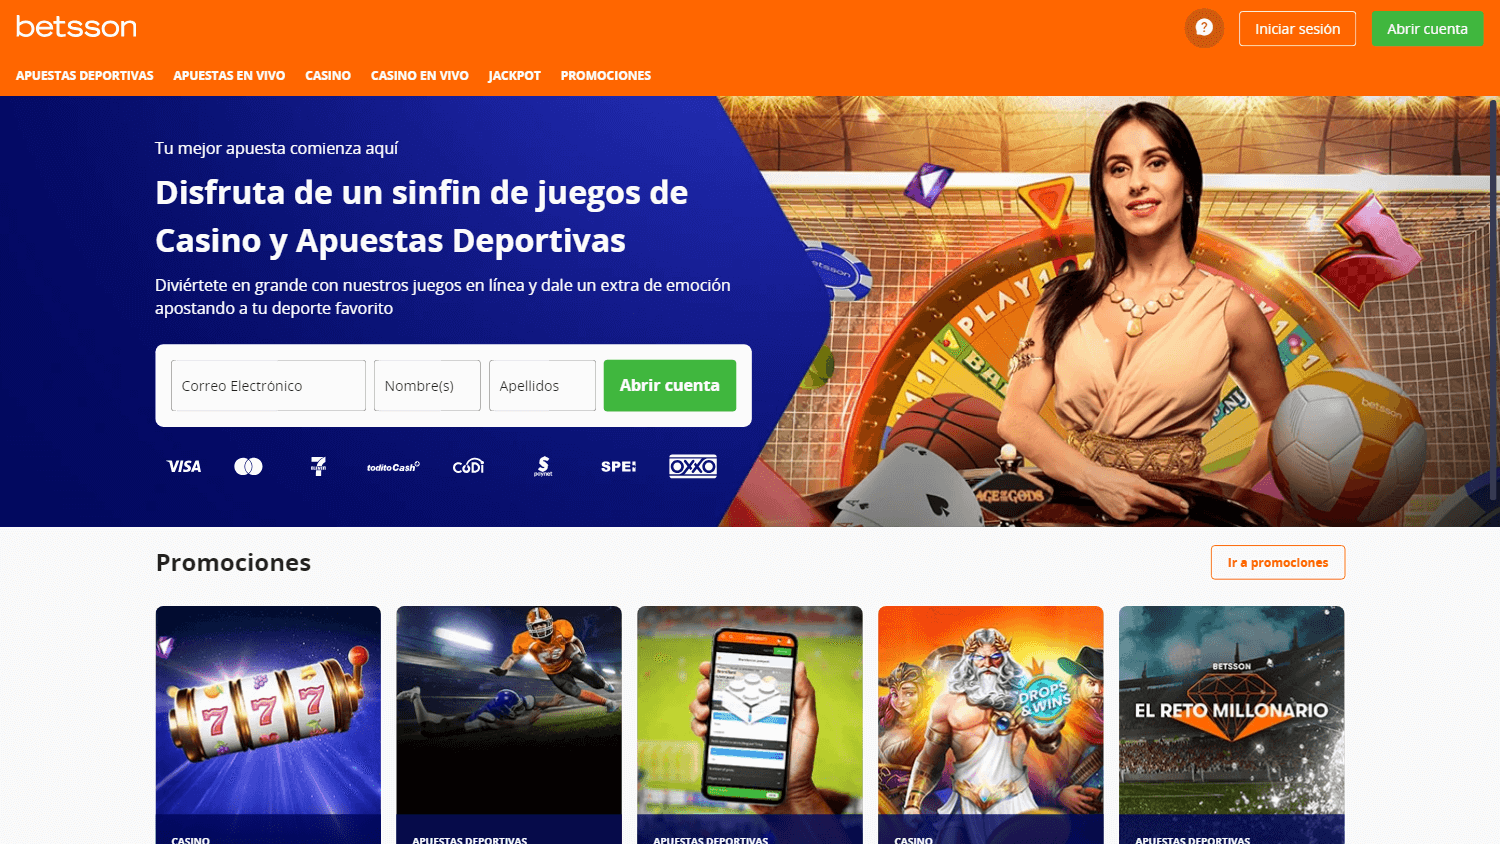 betsson_casino_mx_homepage_desktop